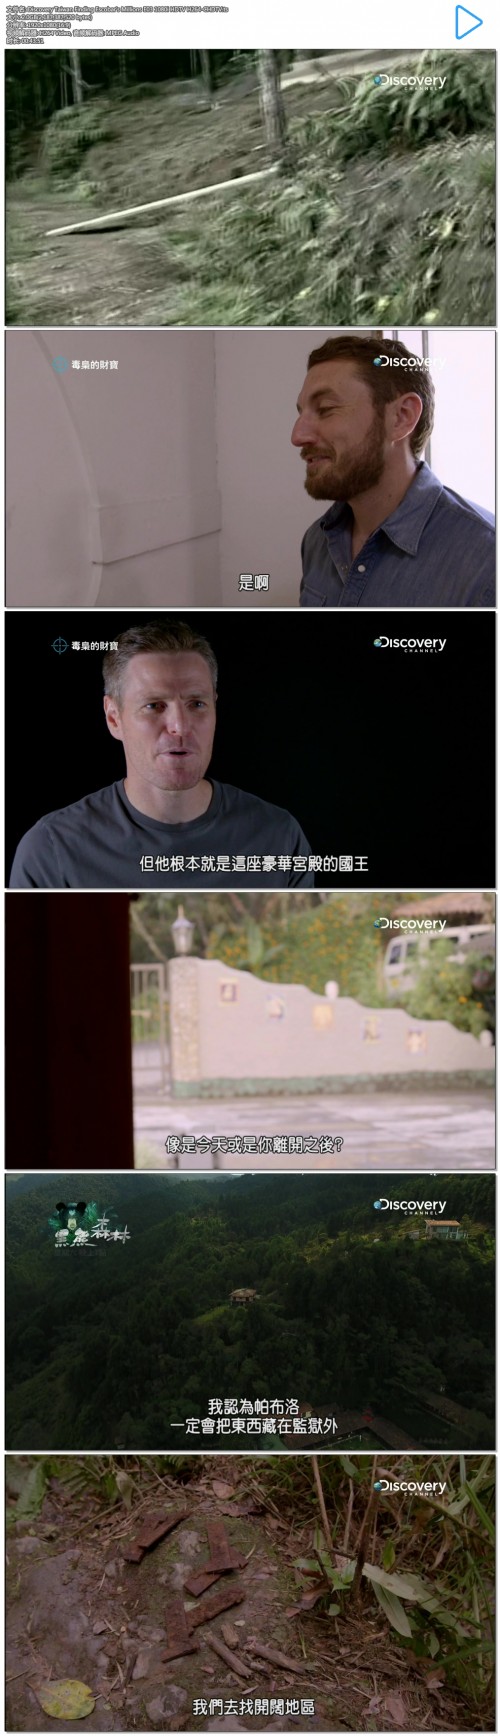 Discovery Taiwan Finding Escobar's Millions E03 1080i HDTV H264 CHDTV.ts